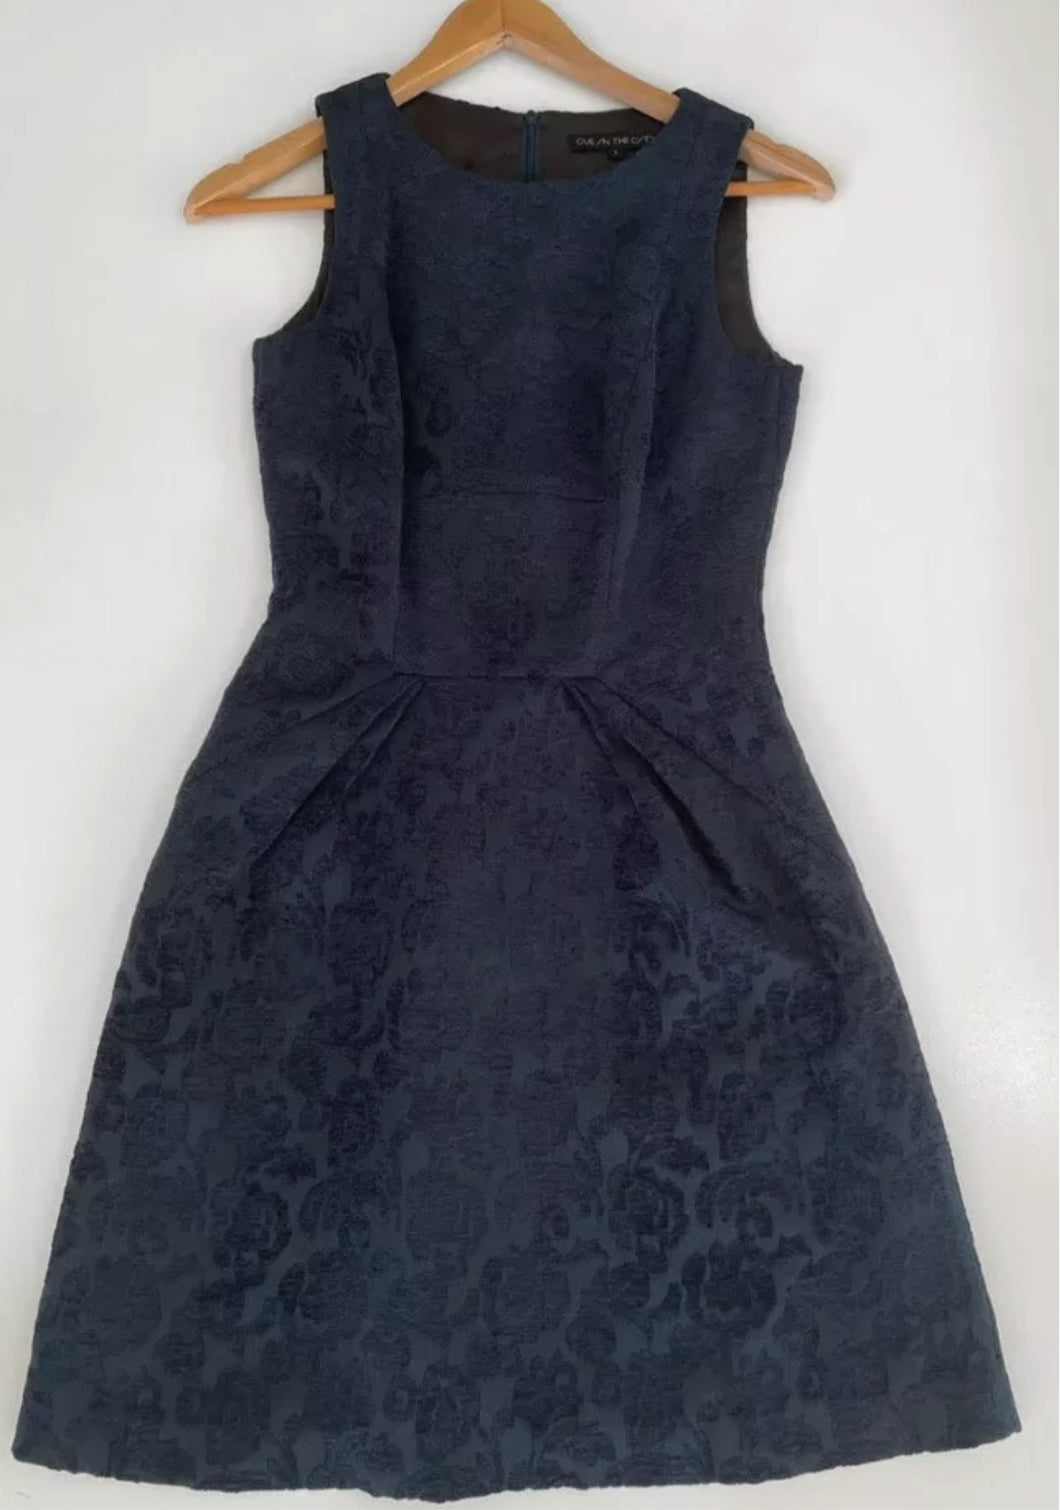 CUE gorgeous Textured Navy Velvet A Line Fit & Flare Dress Size 6